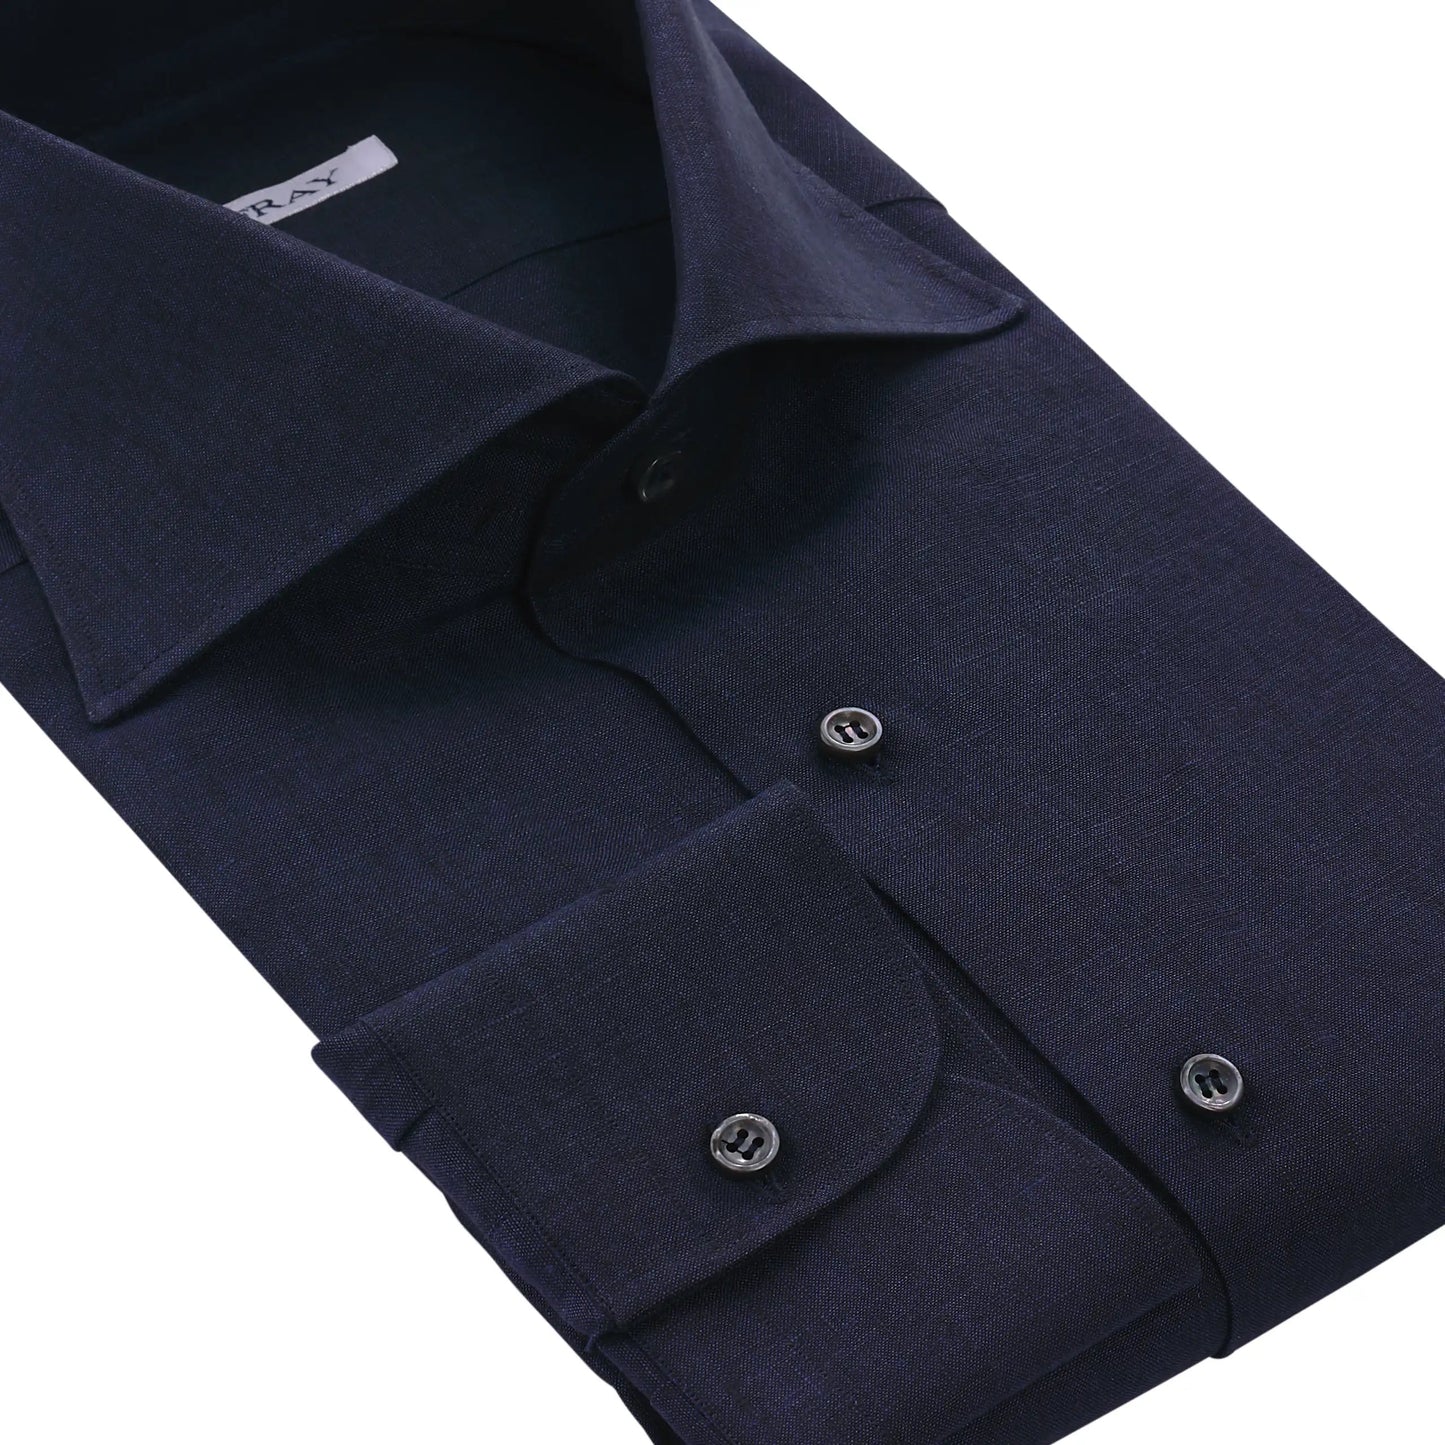 Fray Linen Dark Blue Shirt with Spread Collar - SARTALE